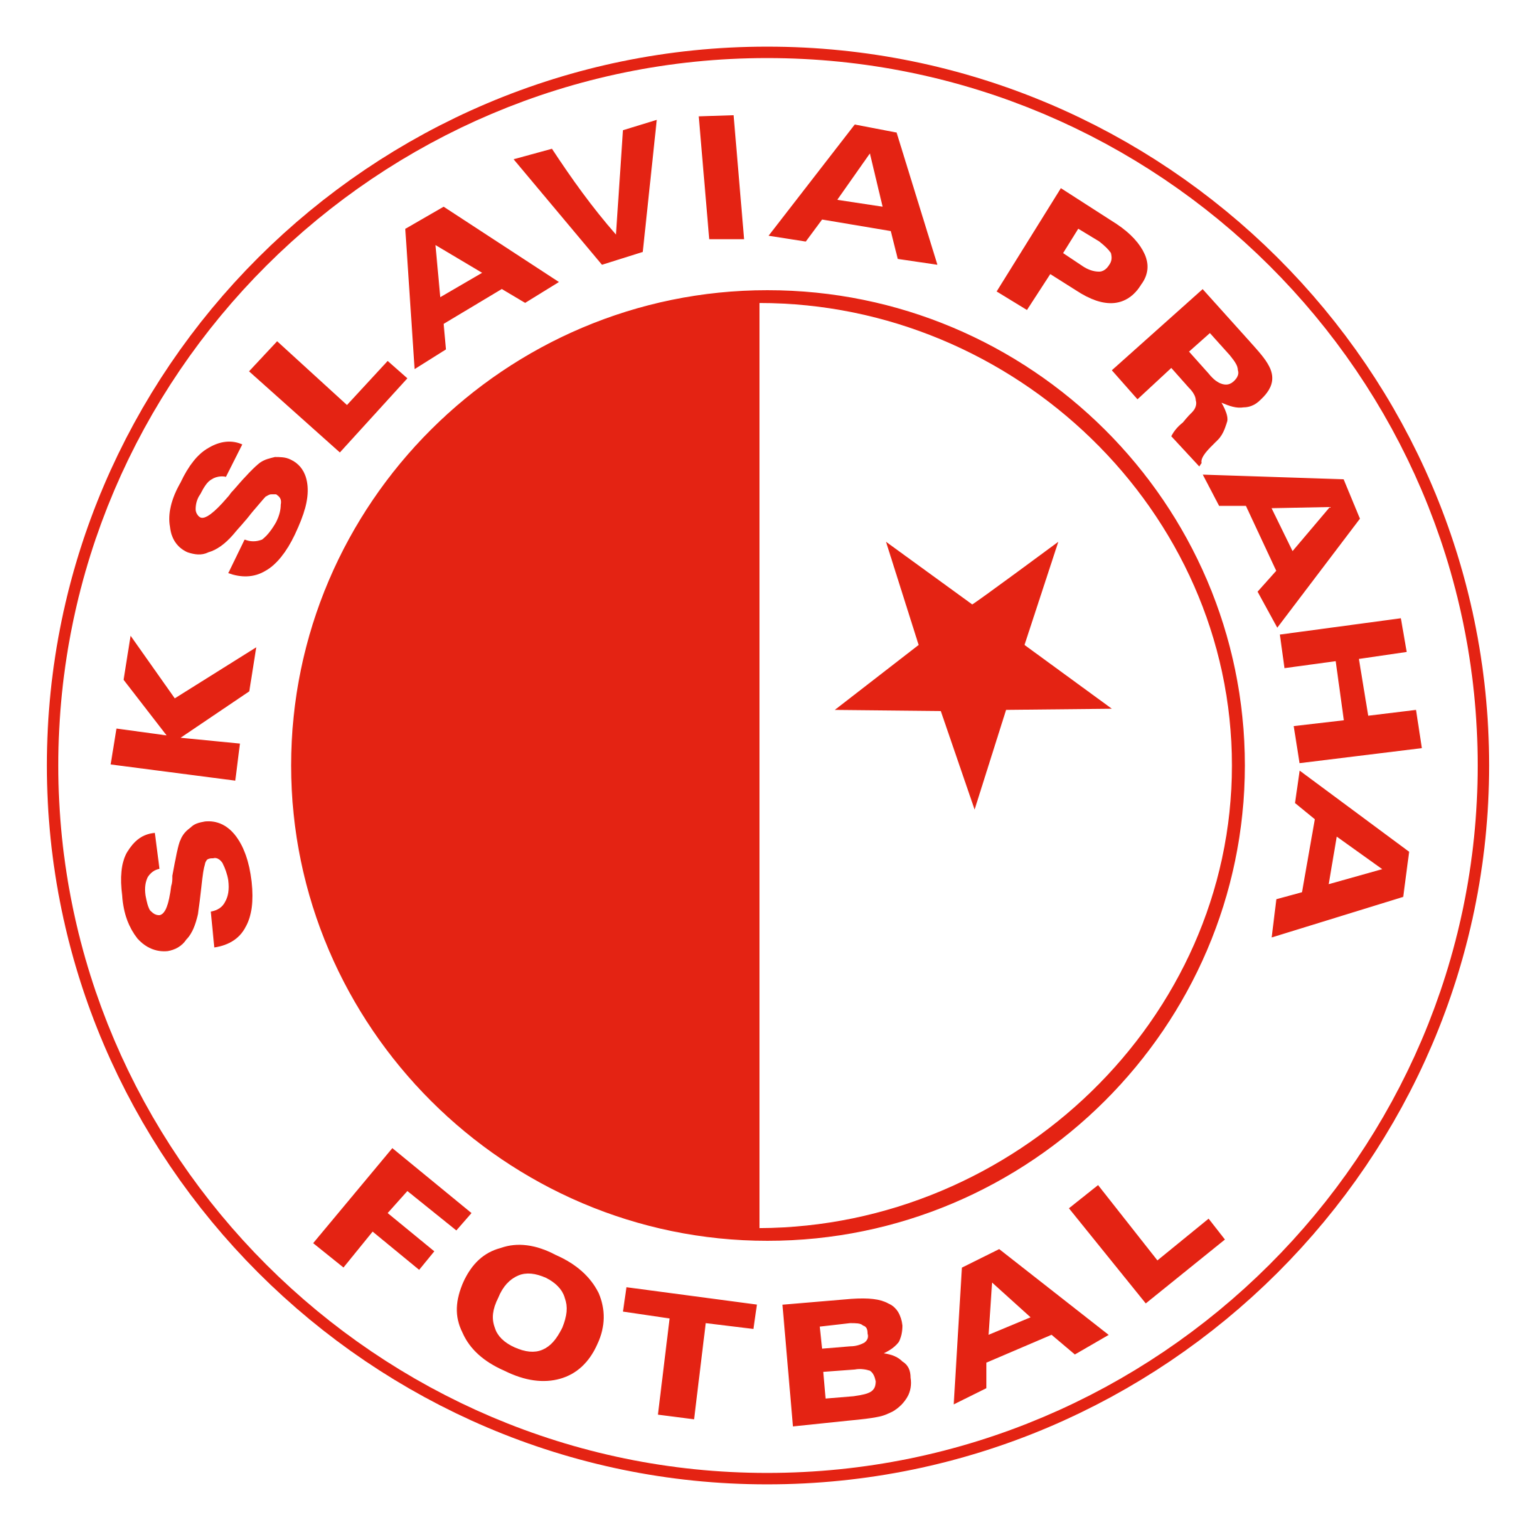 SK Slavia Praga Logo – Escudo - PNG e Vetor - Download de Logo